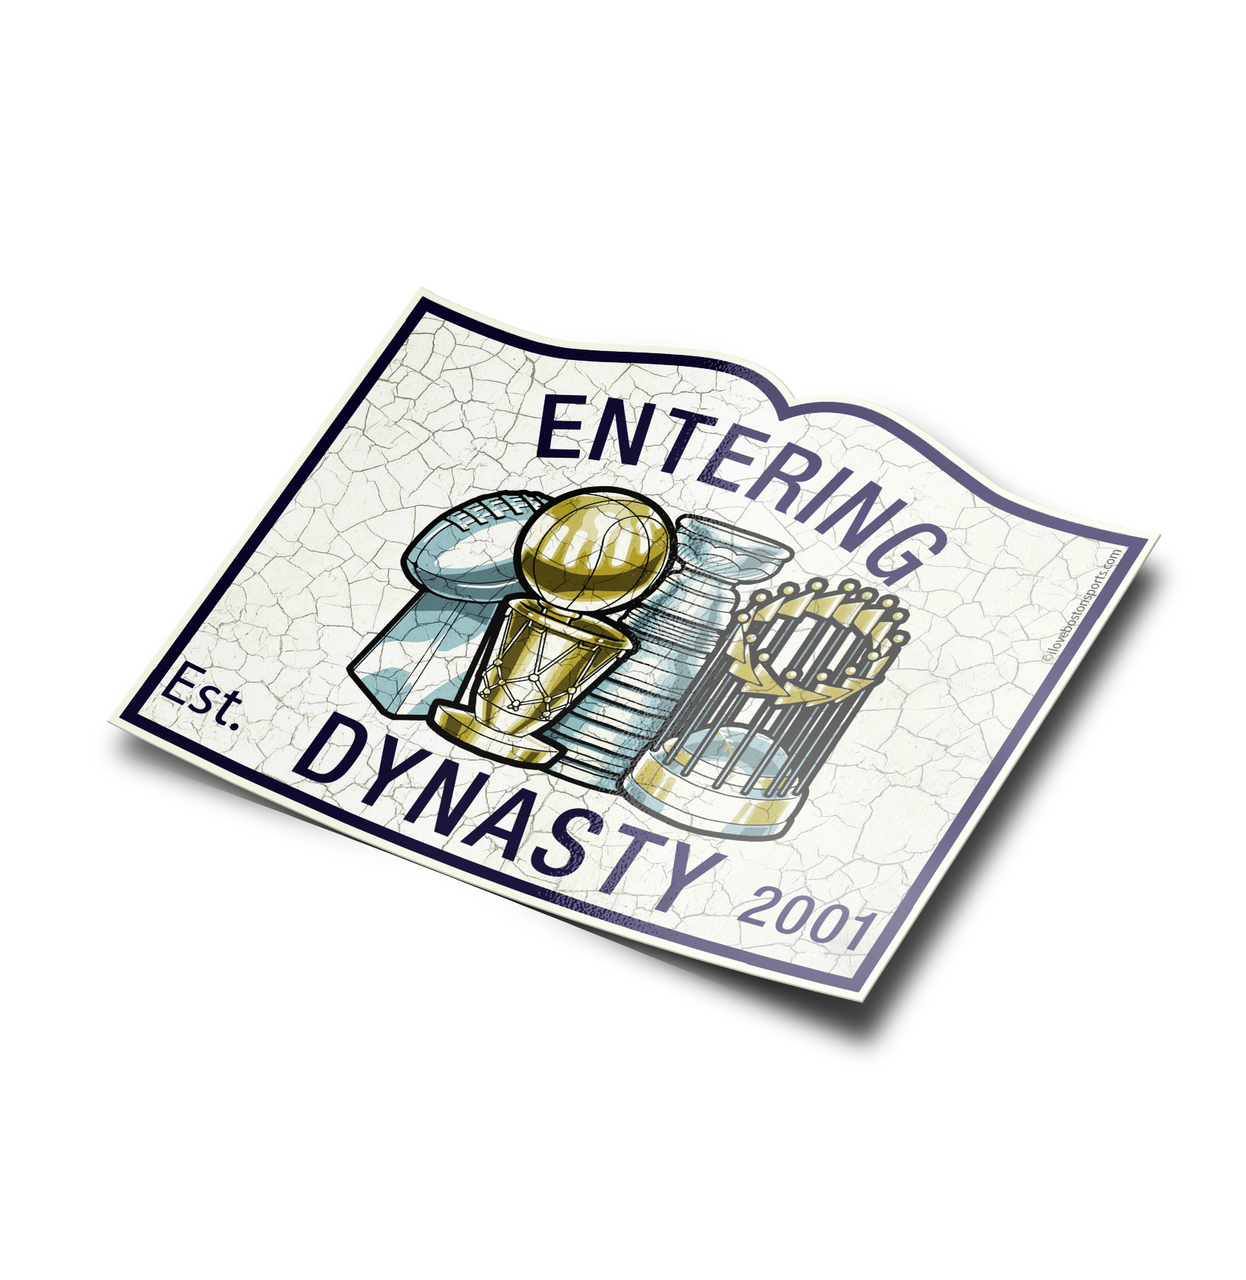 Entering Dynasty Sticker